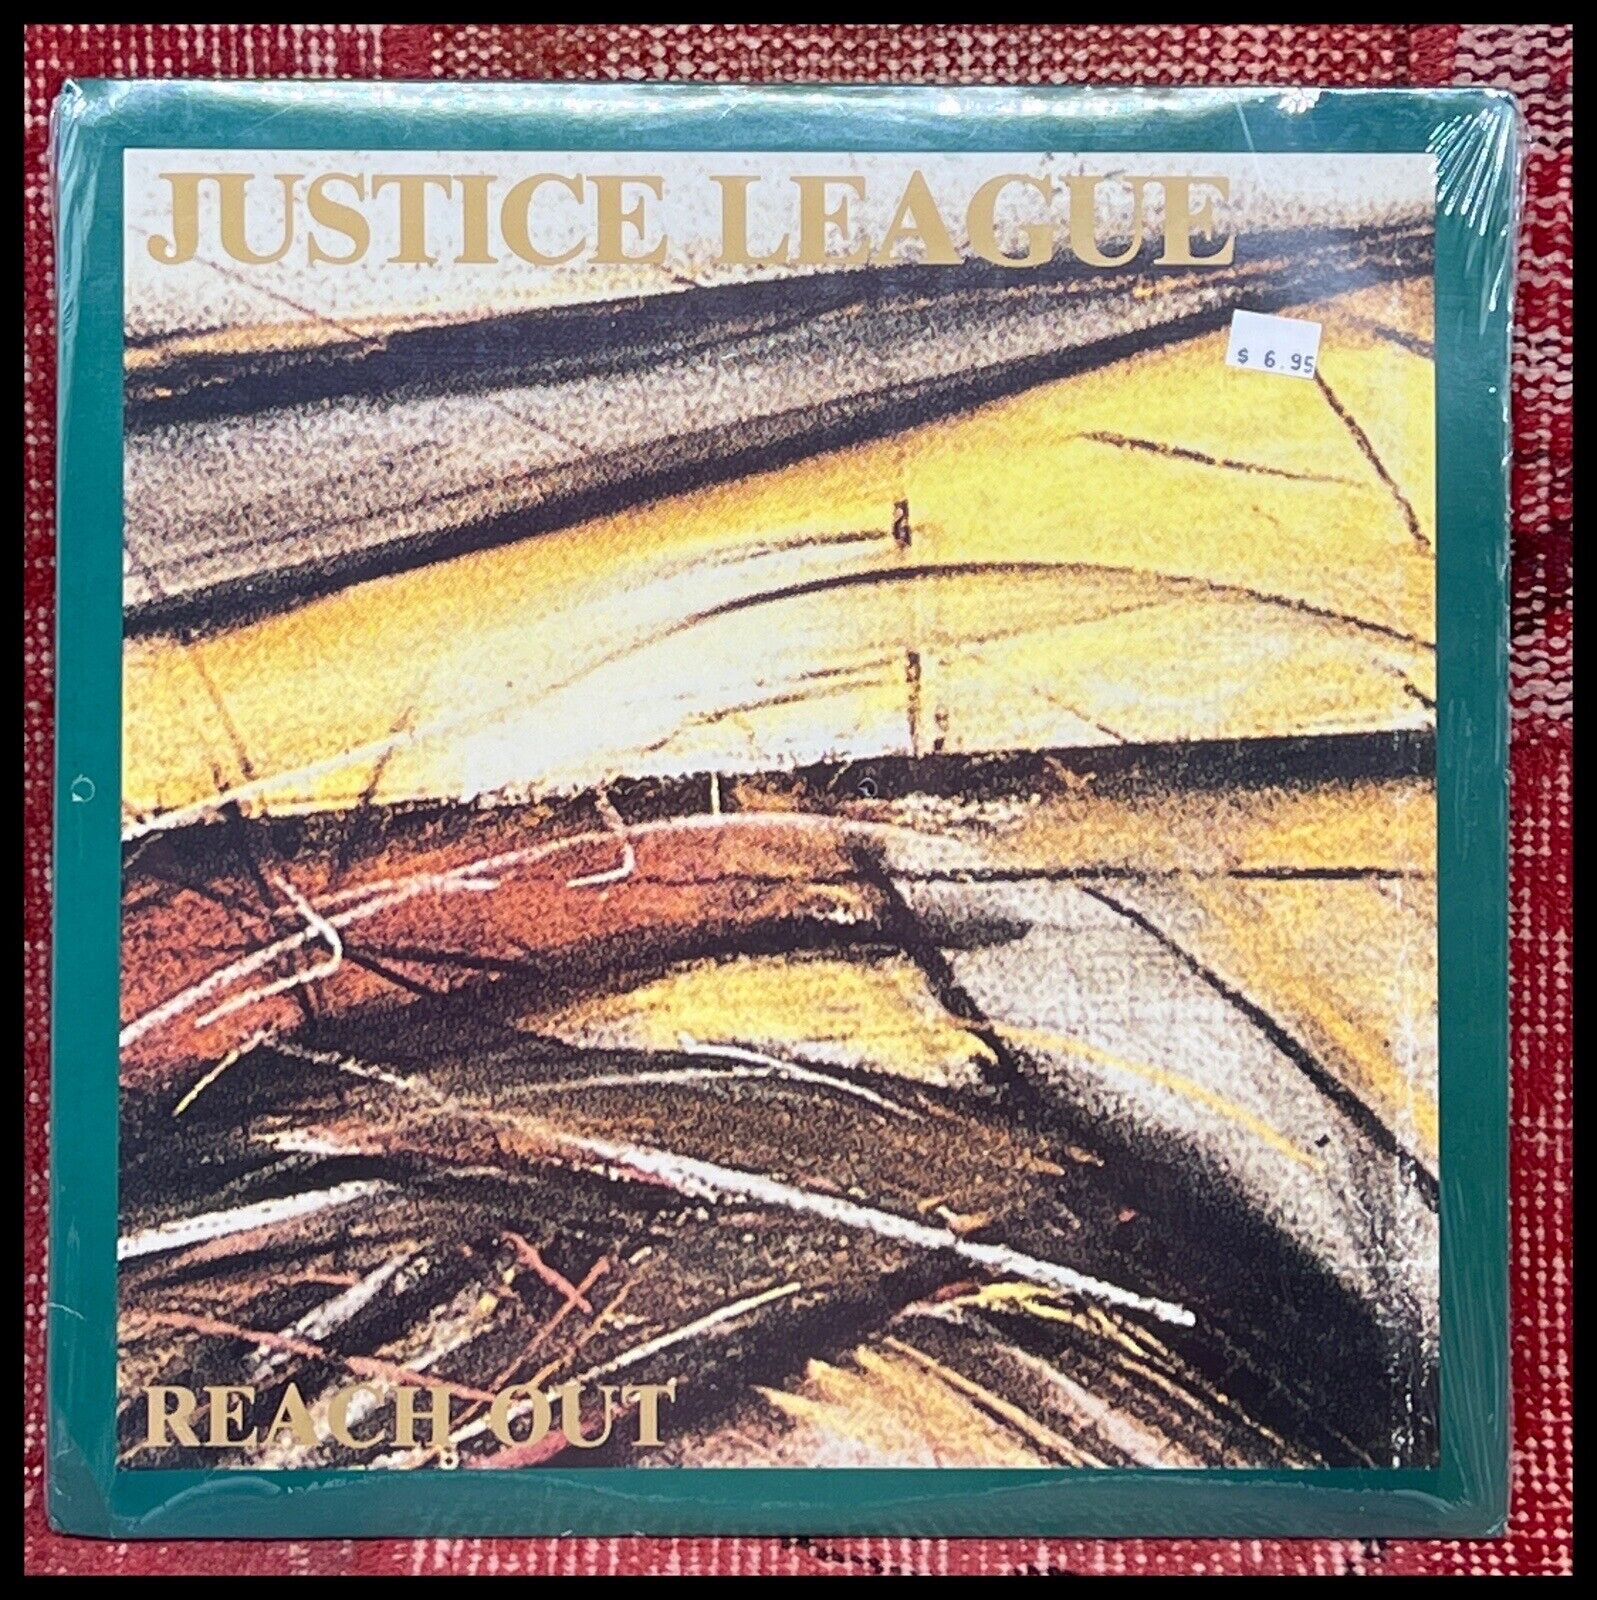 Justice League Reach Out Positive Force Records PF16 Mini-Album 1987 Shrink